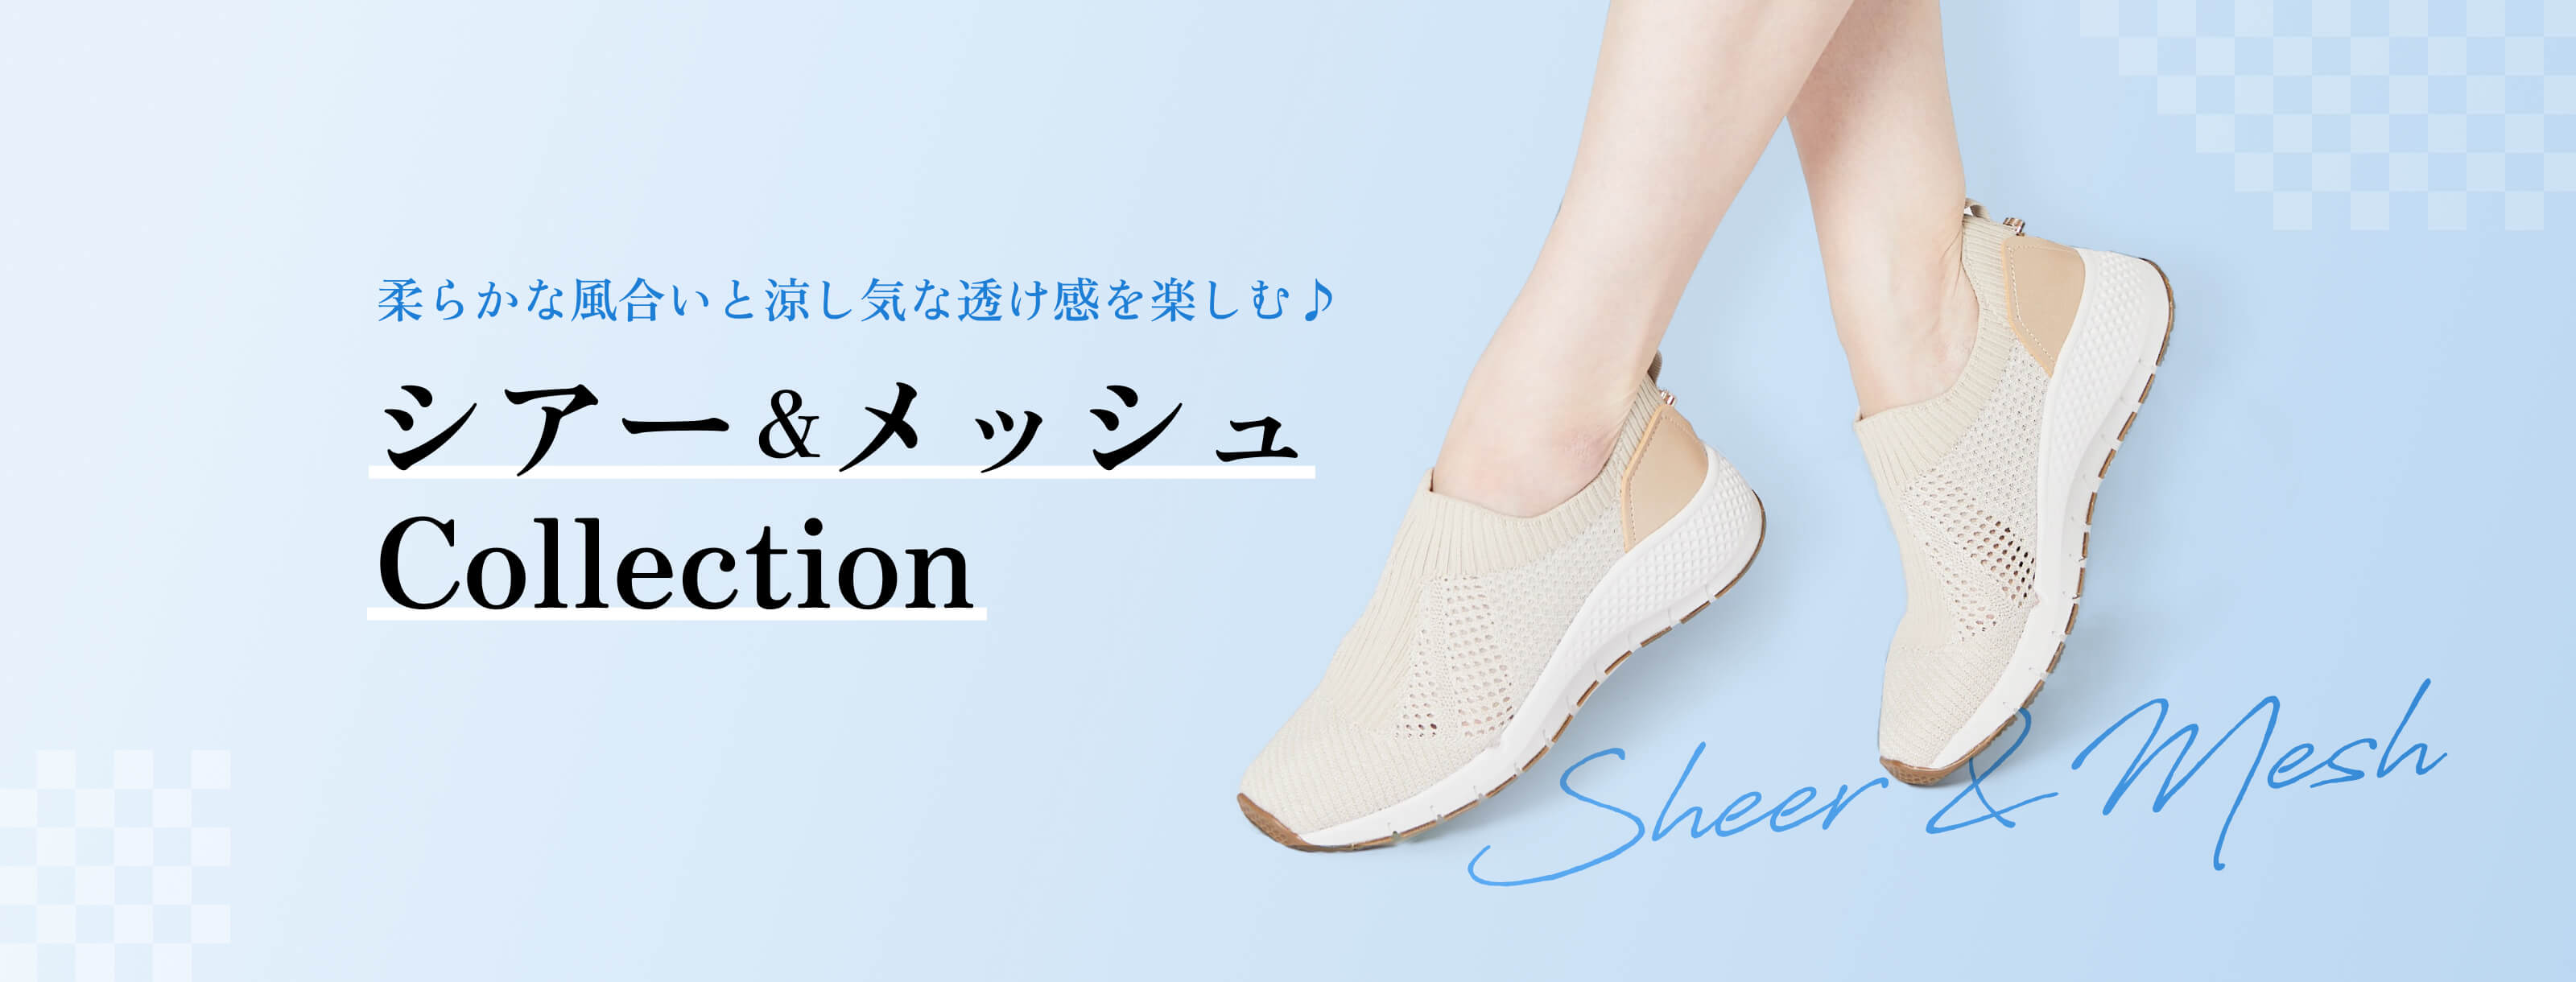 2023 SUMMER 機能美を追求した大人サンダル Functional Sandals